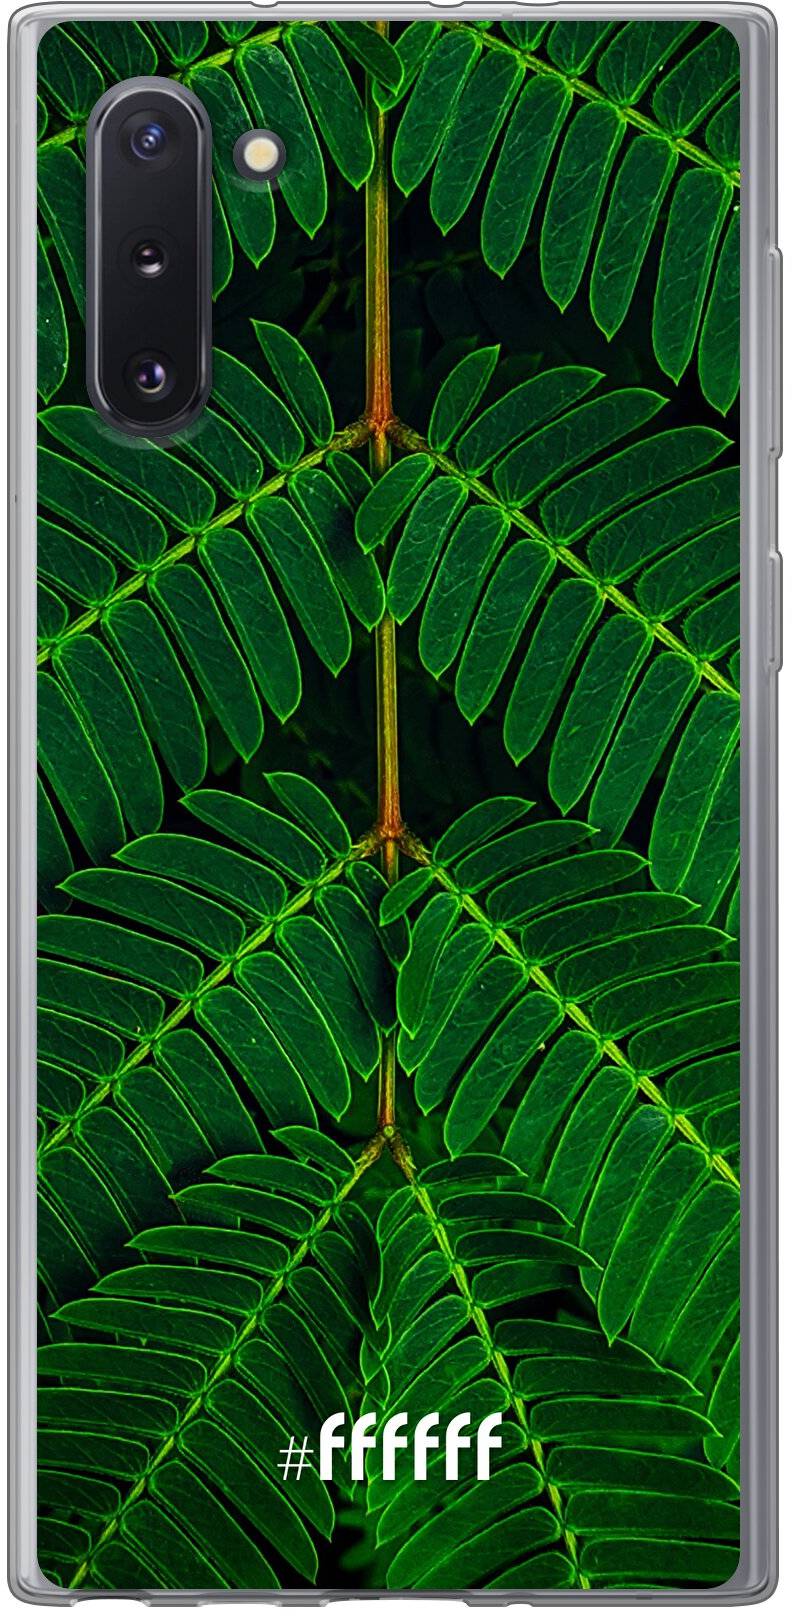 Symmetric Plants Galaxy Note 10